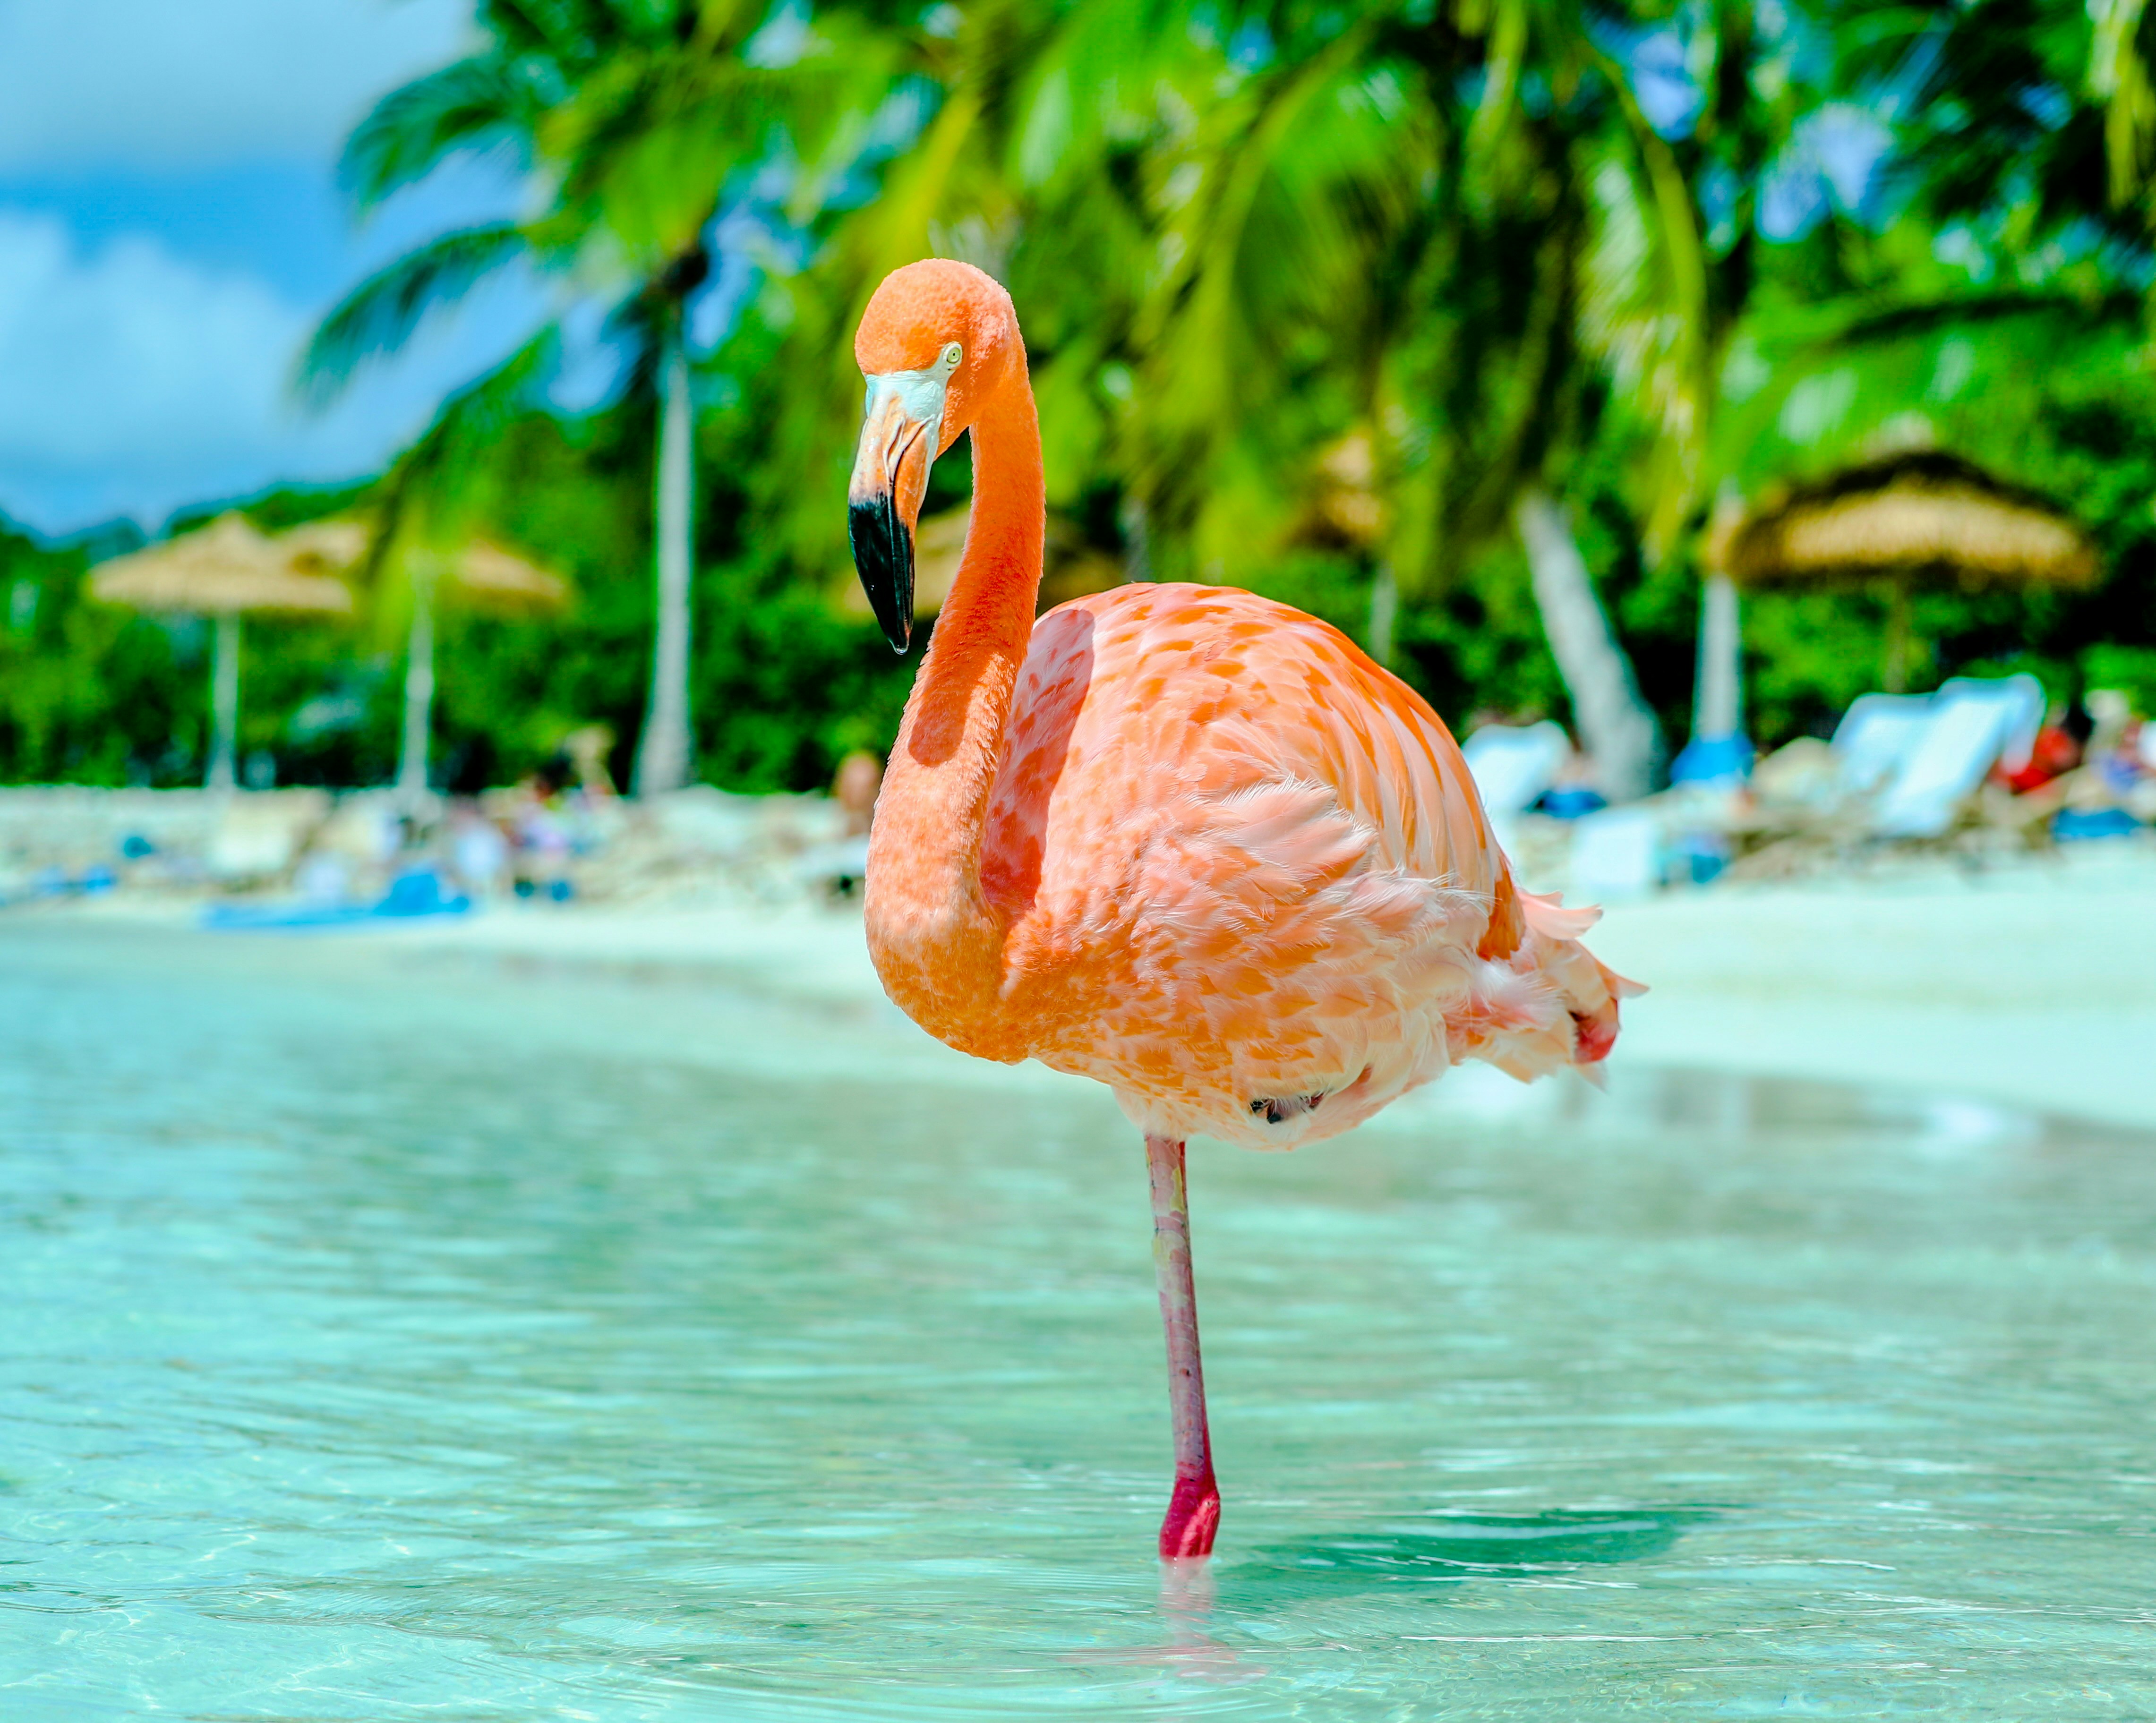 Pink flamingo on the Renaissance island, part of Aruba island, the Caribbean islands.